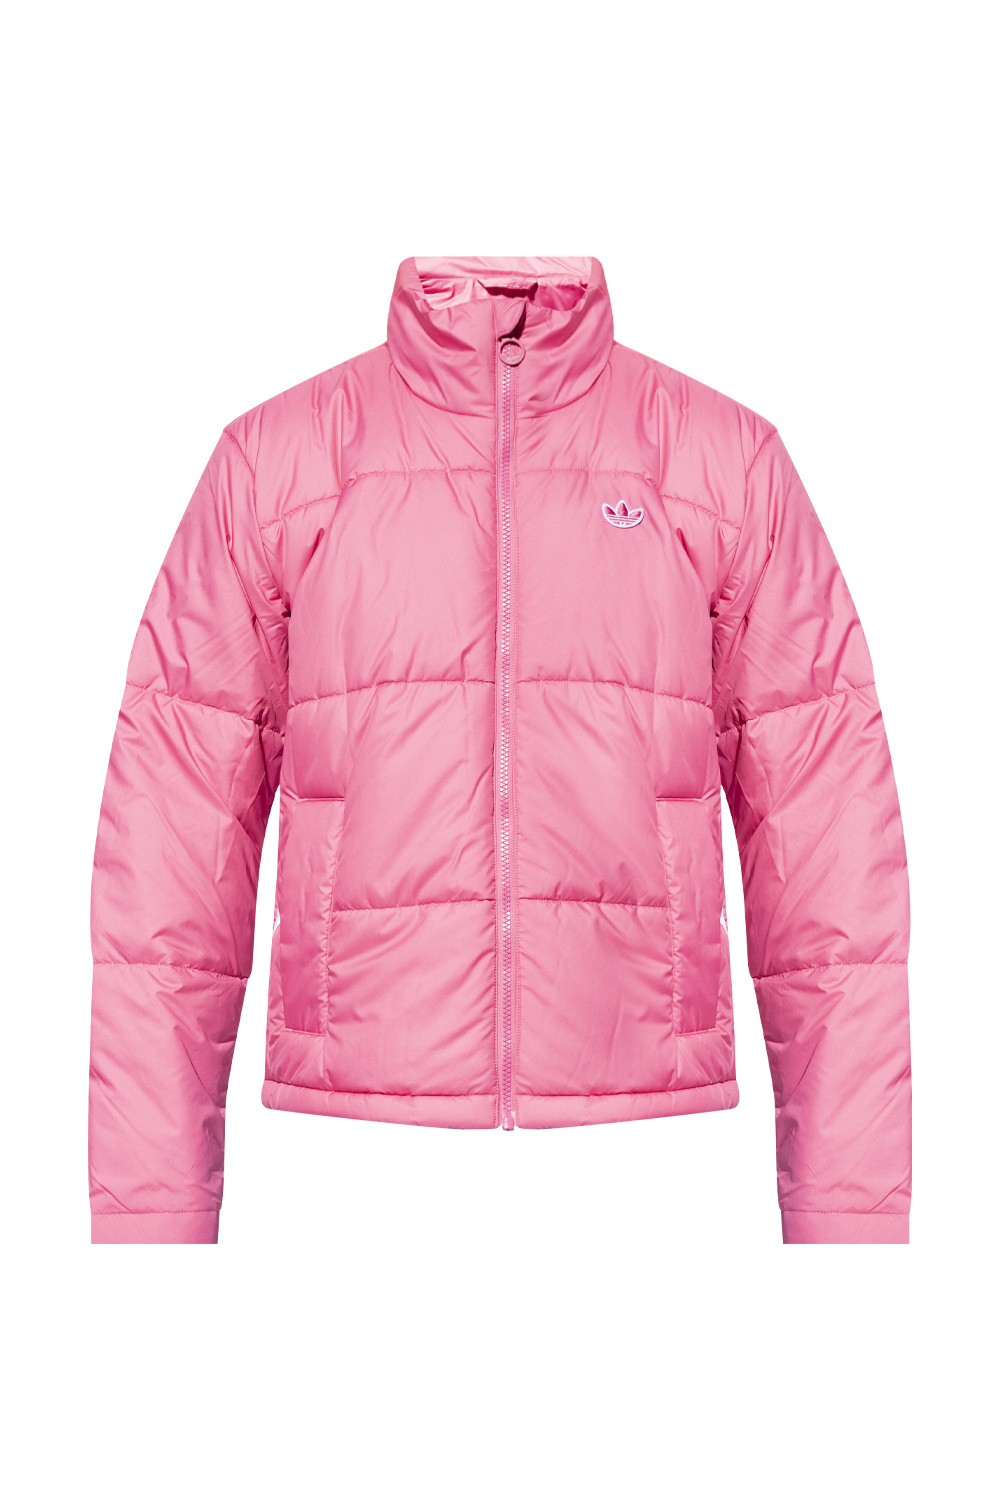 ADIDAS Originals quilted jacket | Clothing | Vitkac